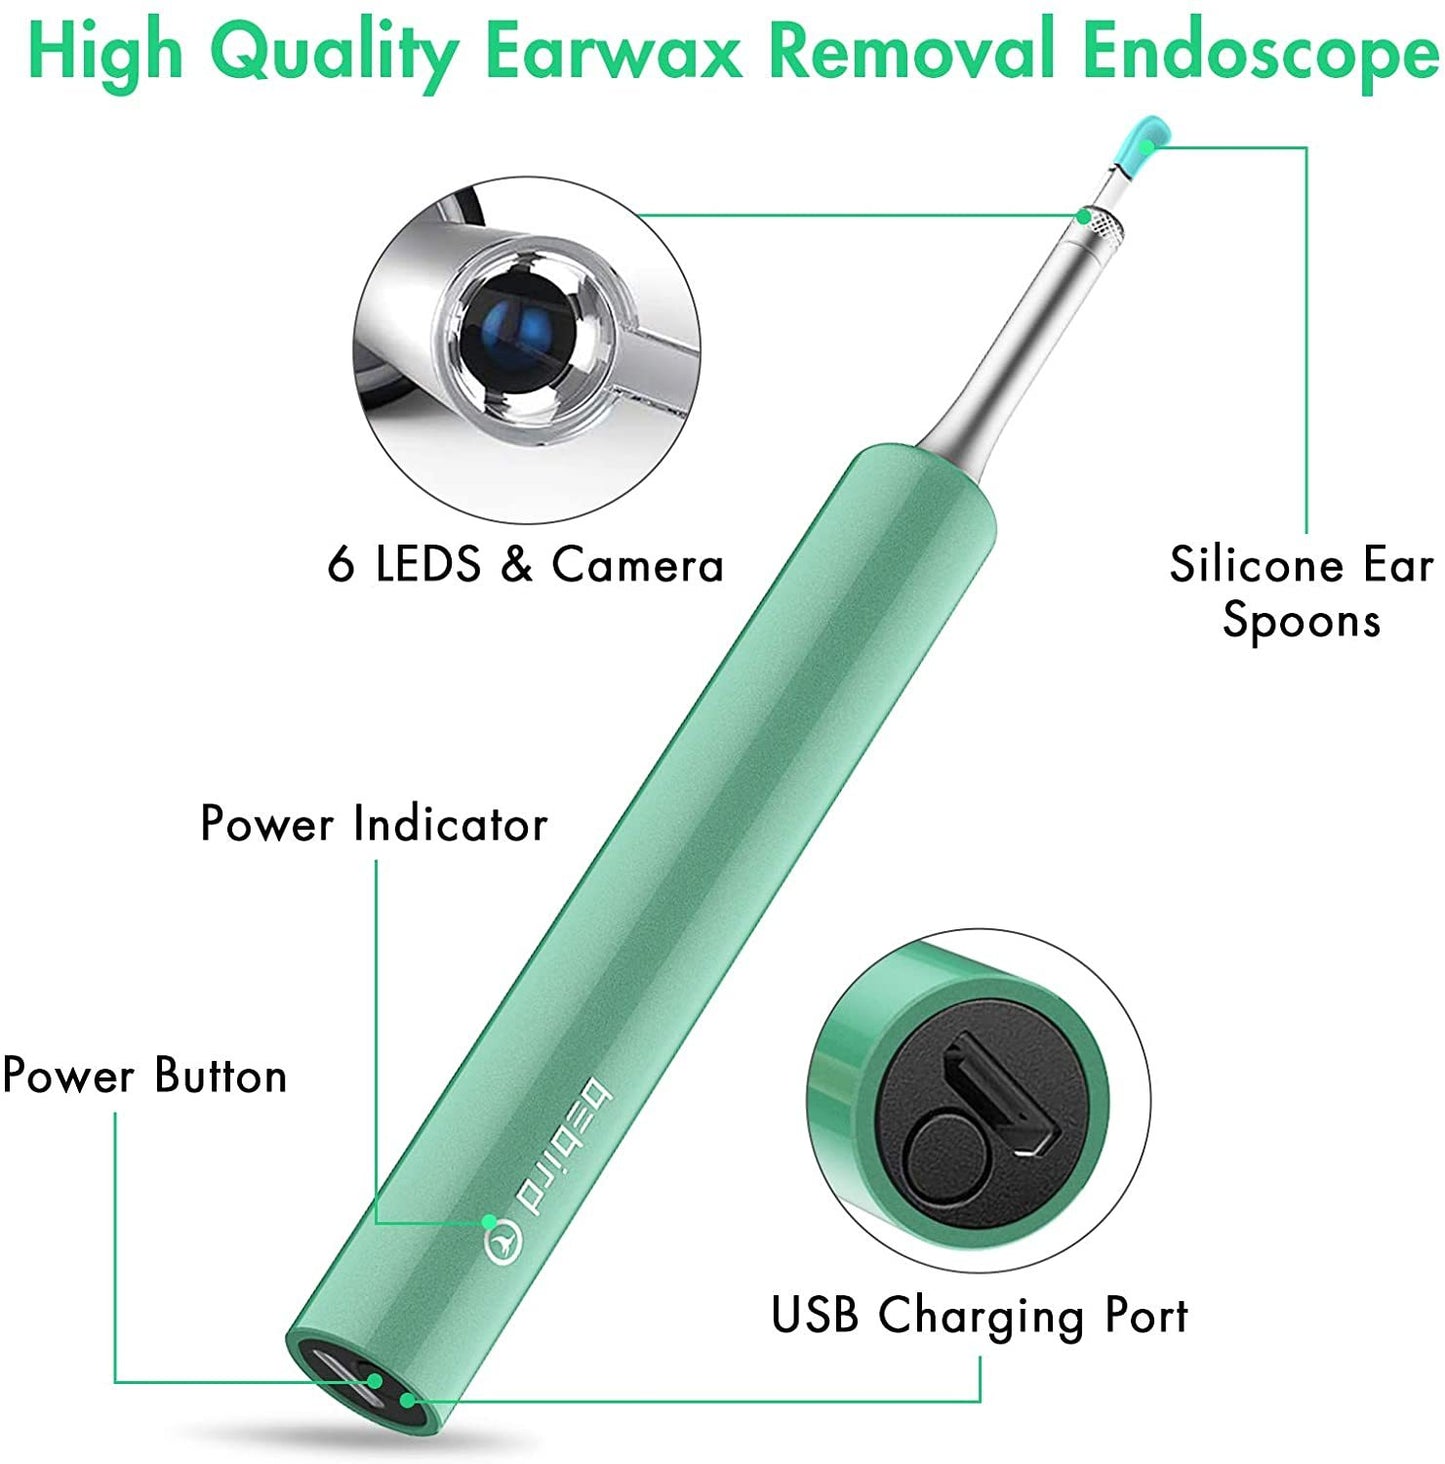 Bebird Earwax Removal Endoscope